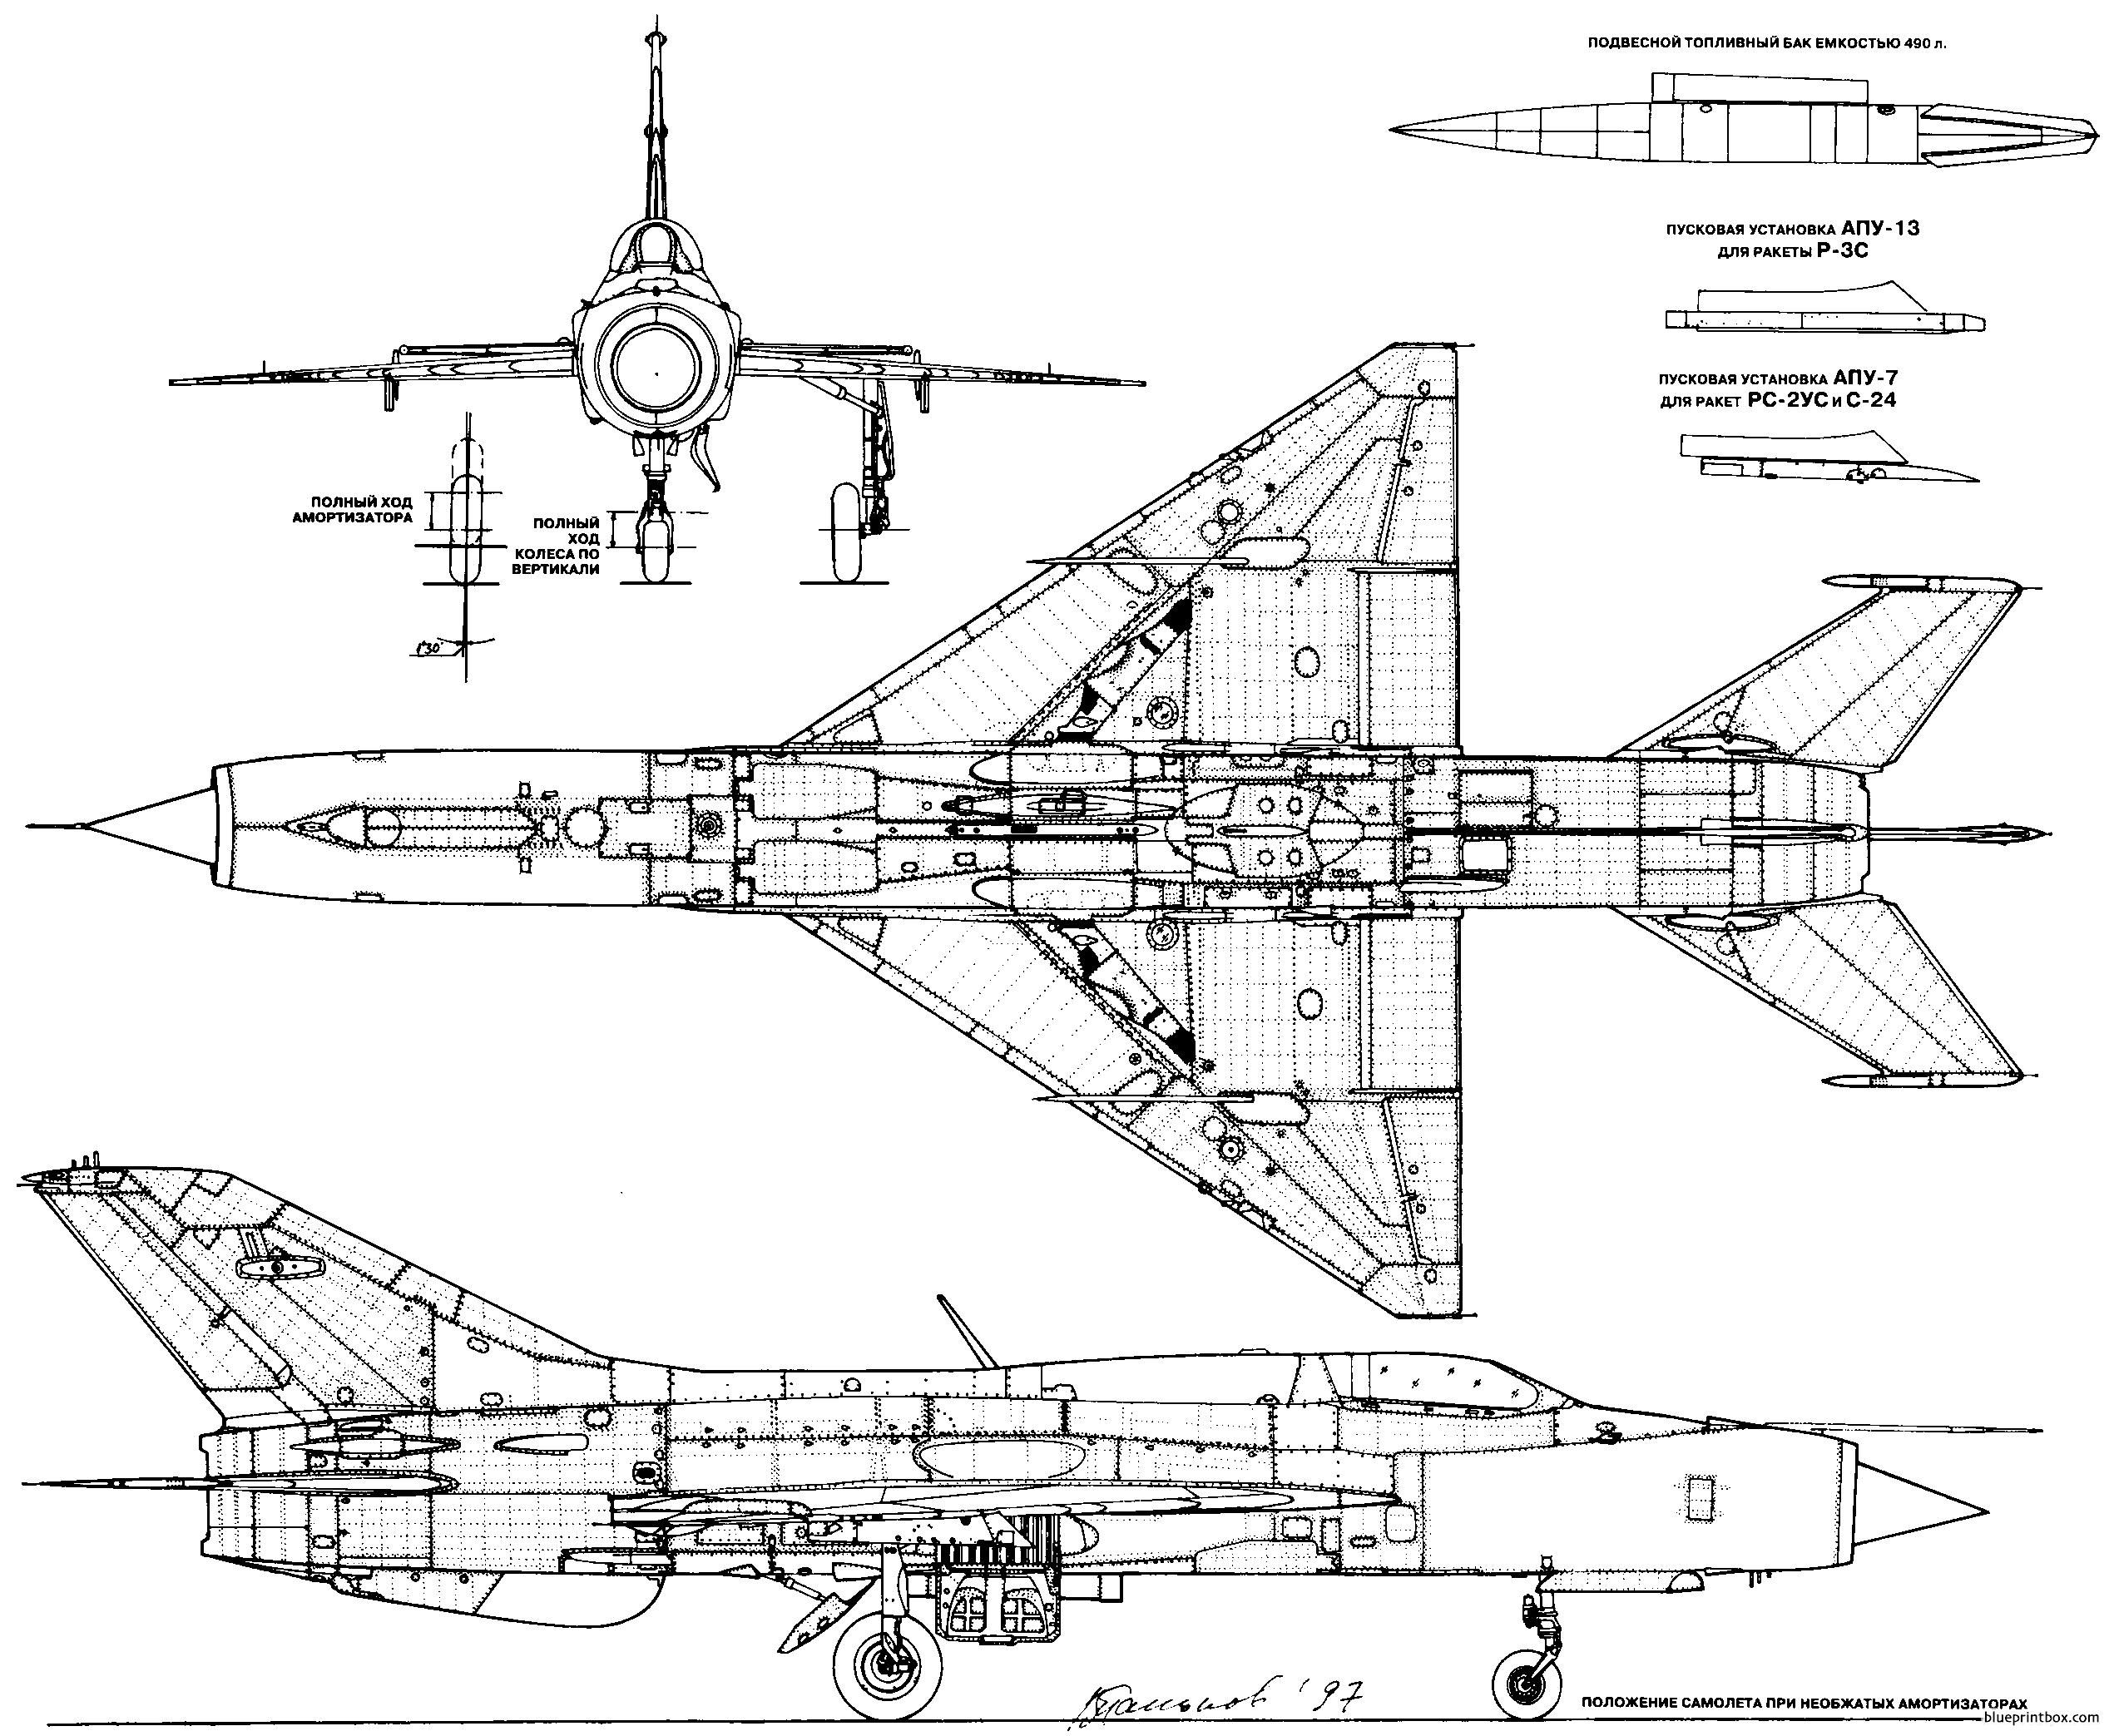 OPERATION FIREFOX - MiG 21bis